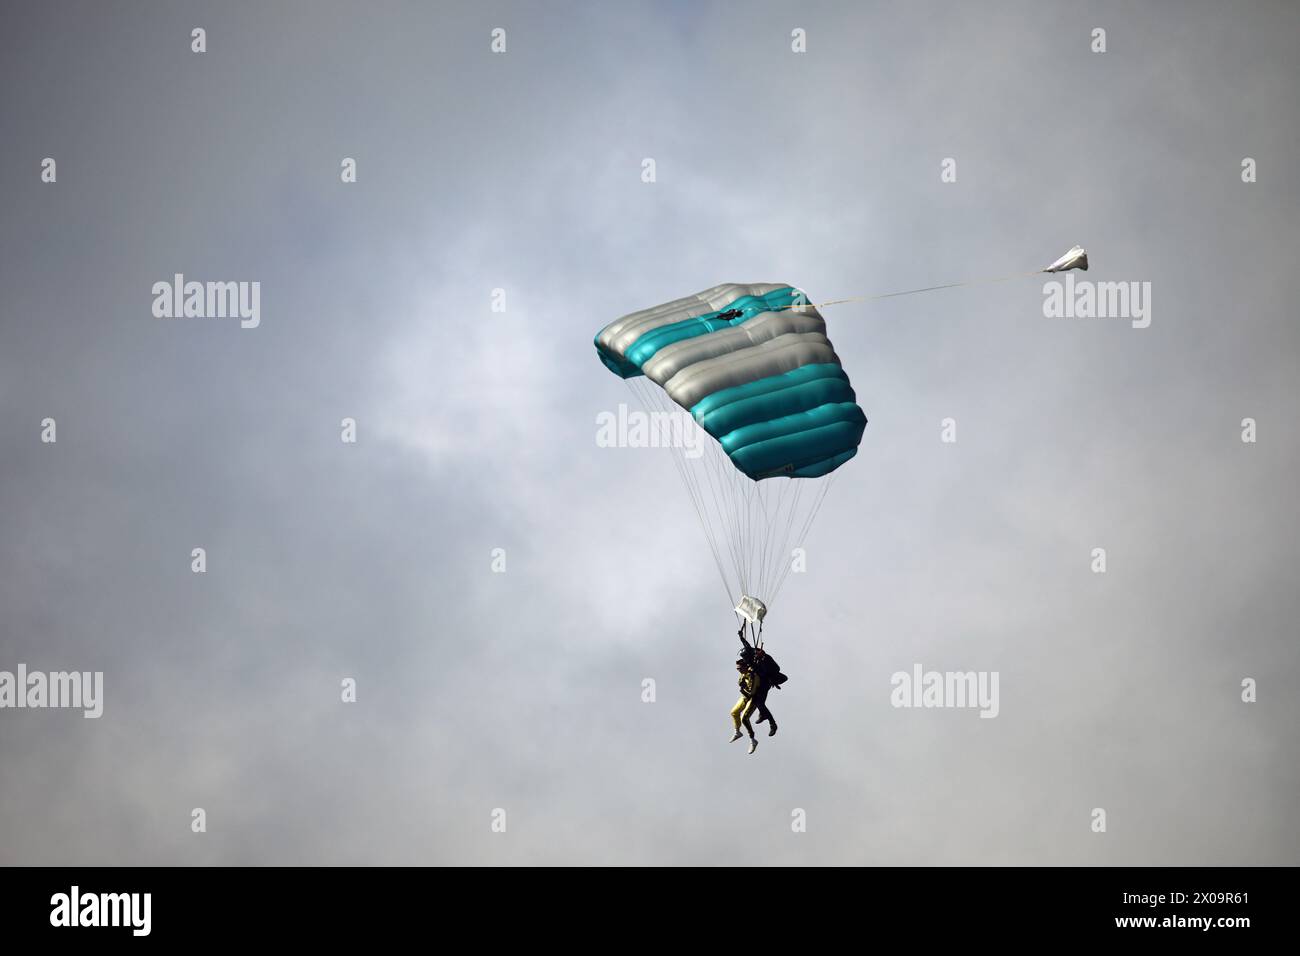 Tandem Parachuting for charity fundraising Stock Photo